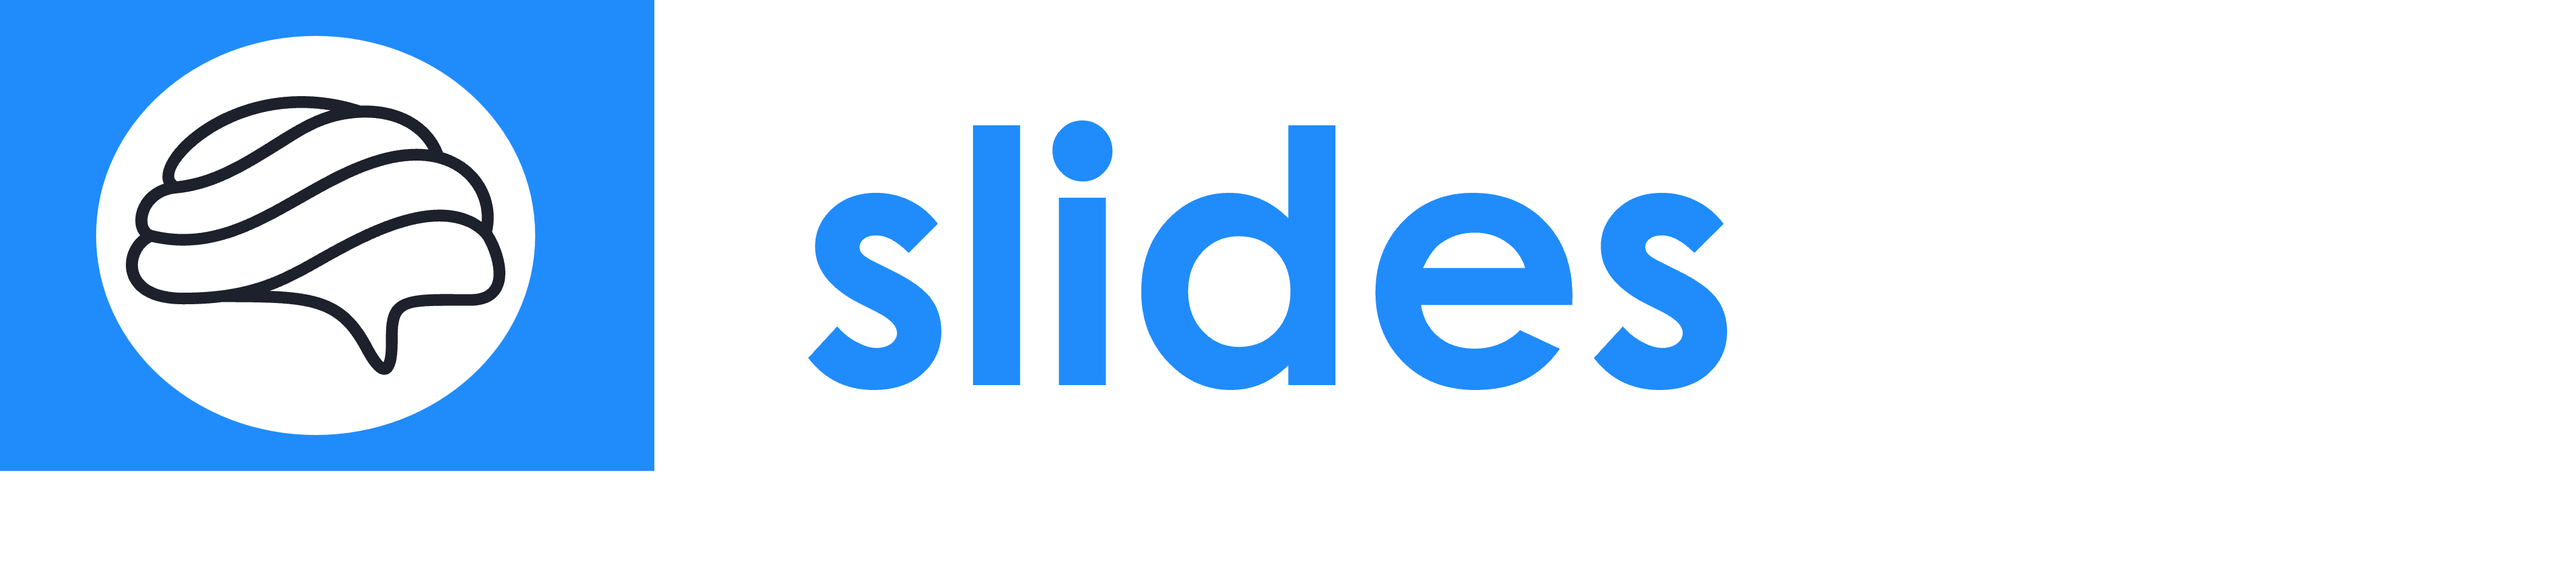 Lifestyle Presentation Templates and Google Slides | SlidesBrain